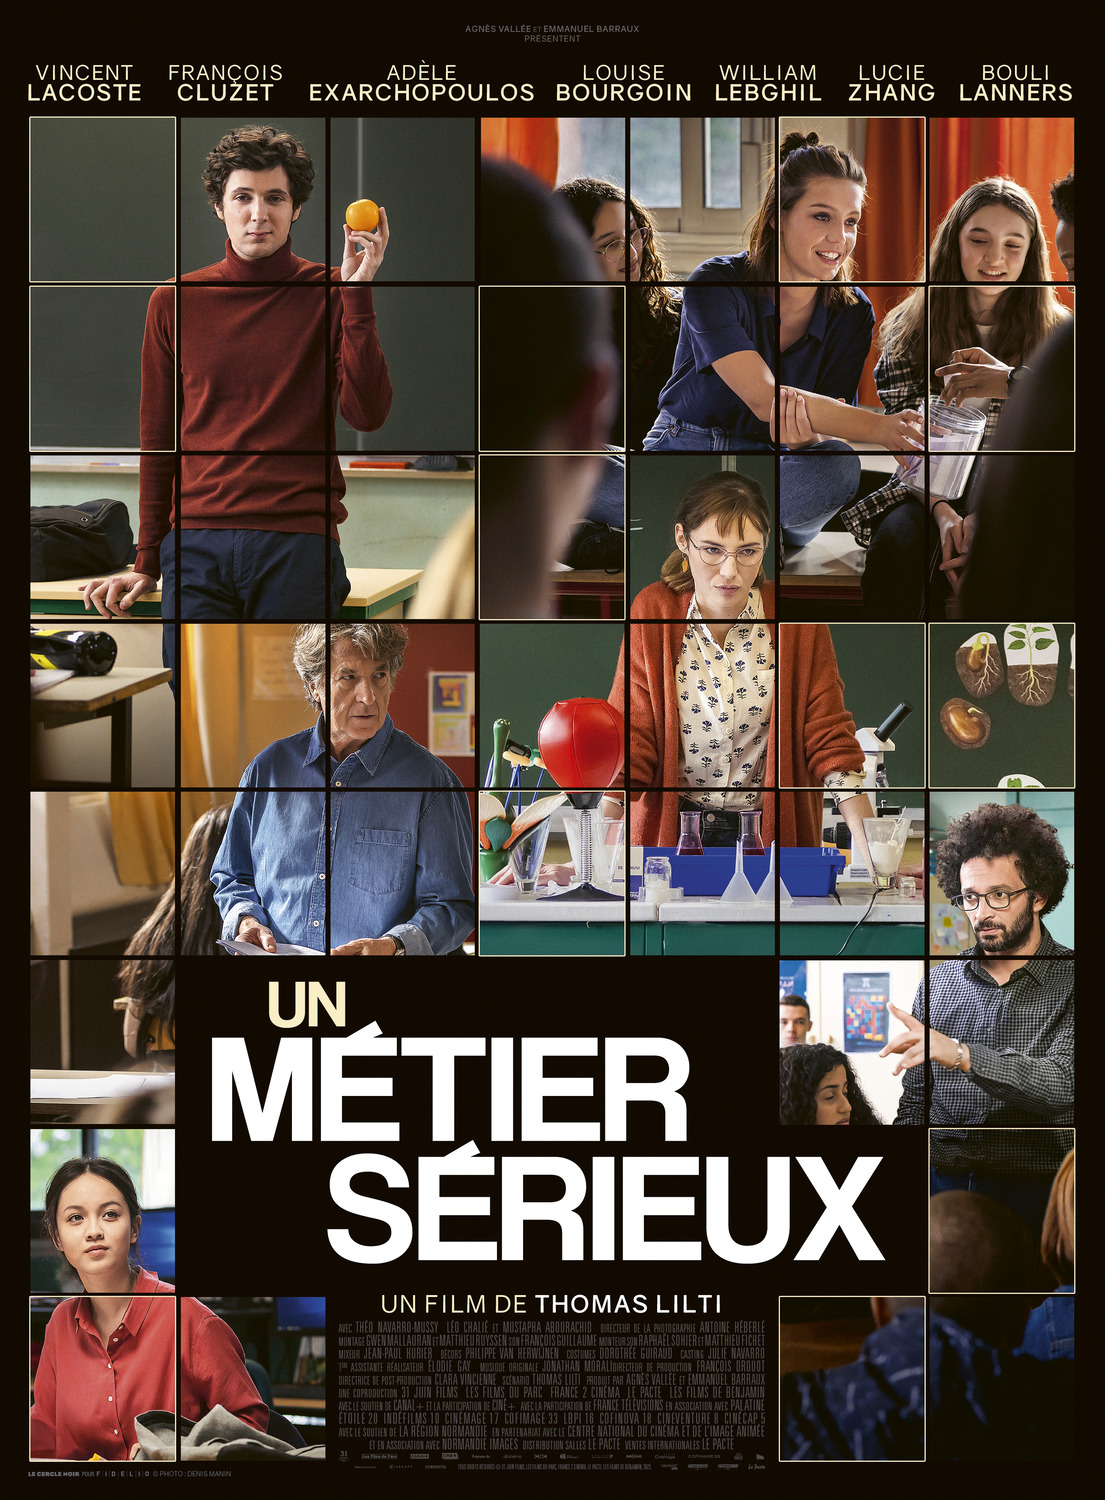 Extra Large Movie Poster Image for Un métier sérieux (#1 of 7)